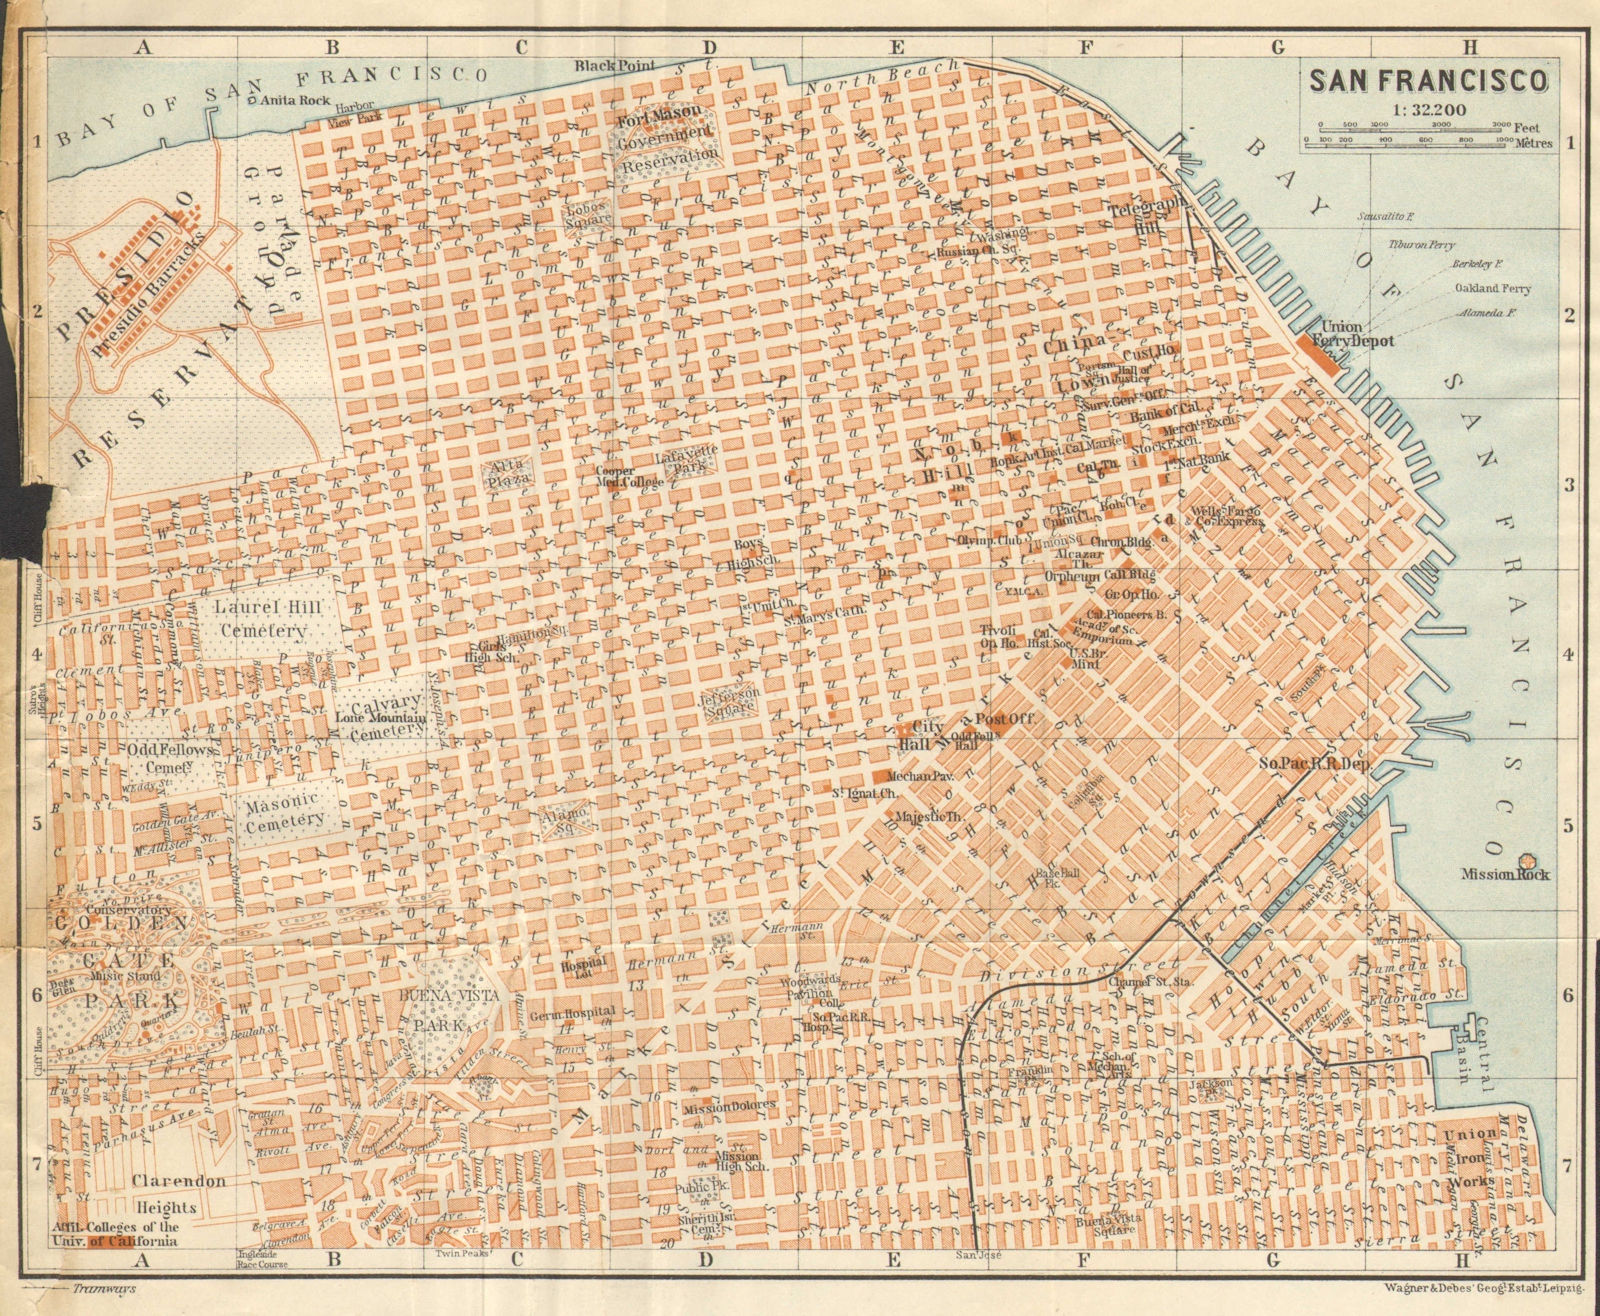 Associate Product SAN FRANCISCO antique town city plan. California. BAEDEKER 1904 old map